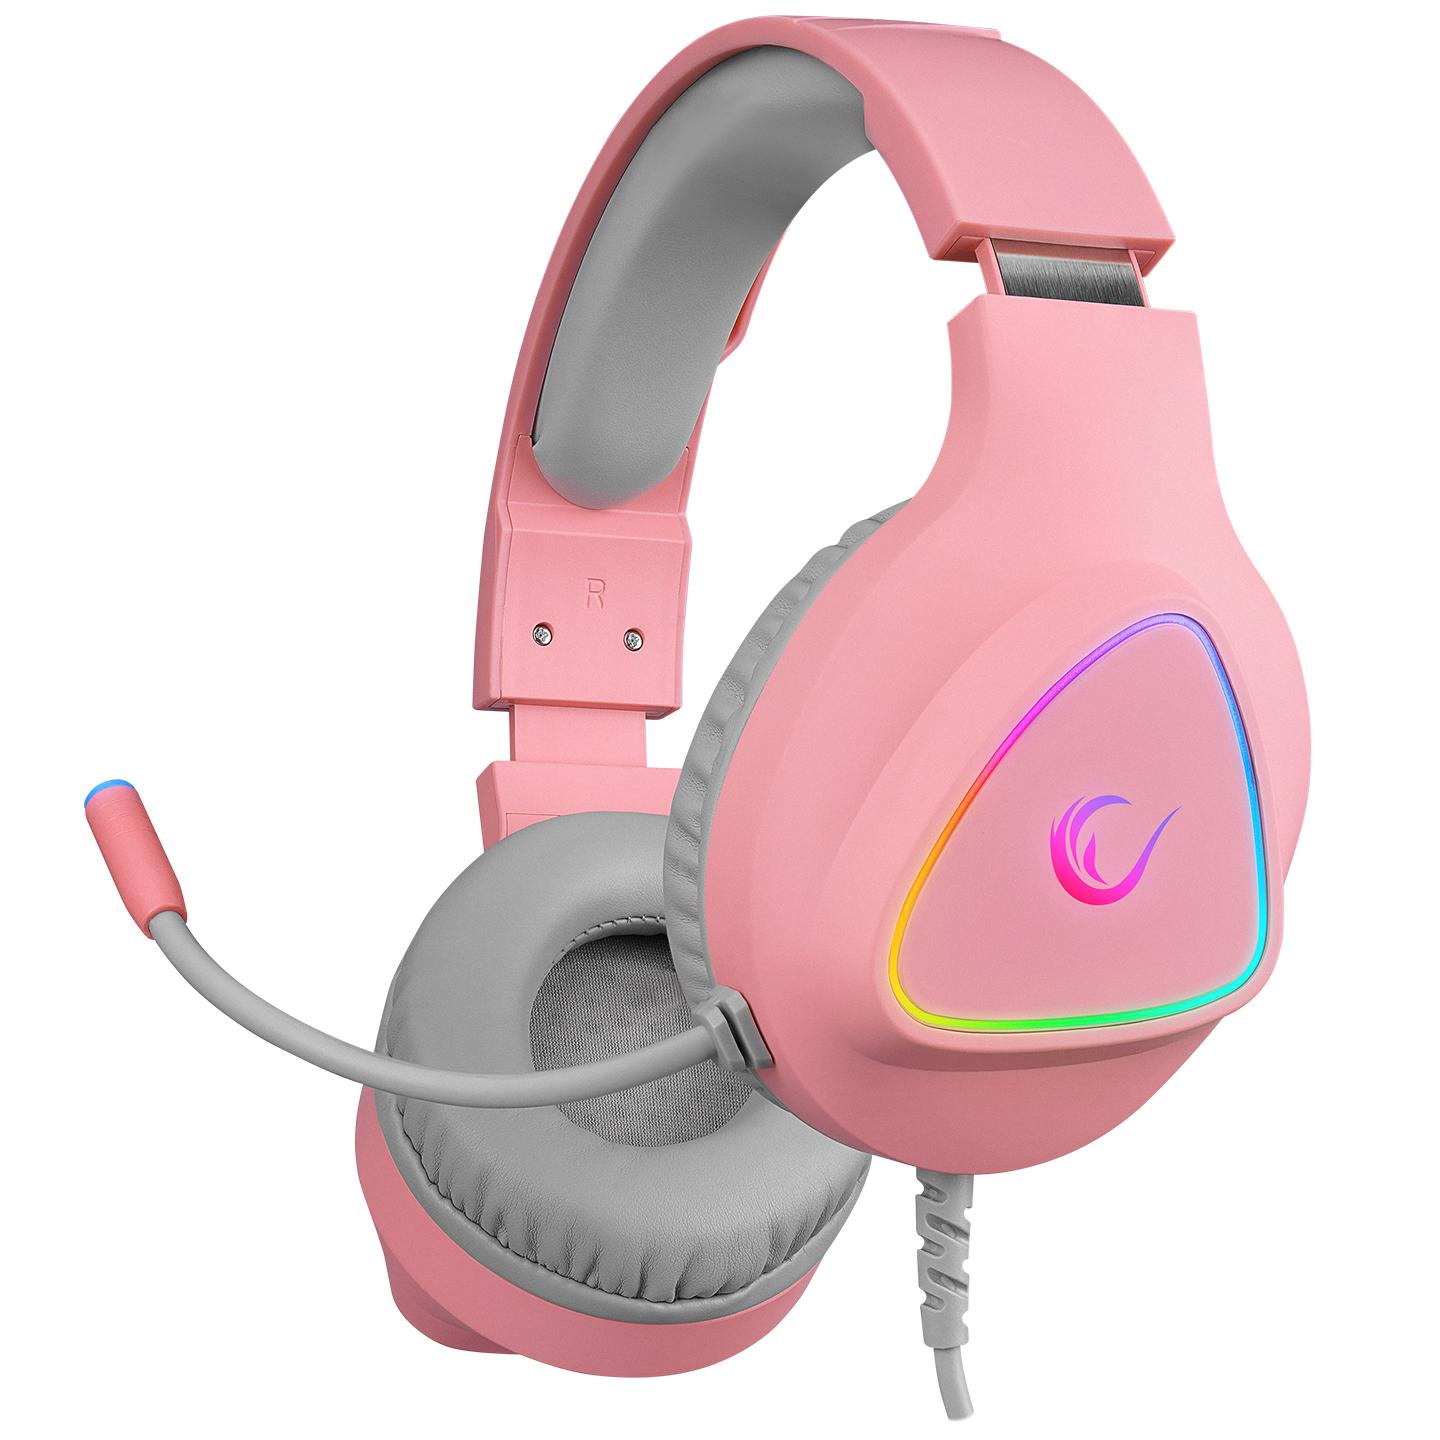 Selected image for RAMPAGE Gejmerske slušalice sa mikrofonom M7 MONCHER RGB Led USB 7.1 roze